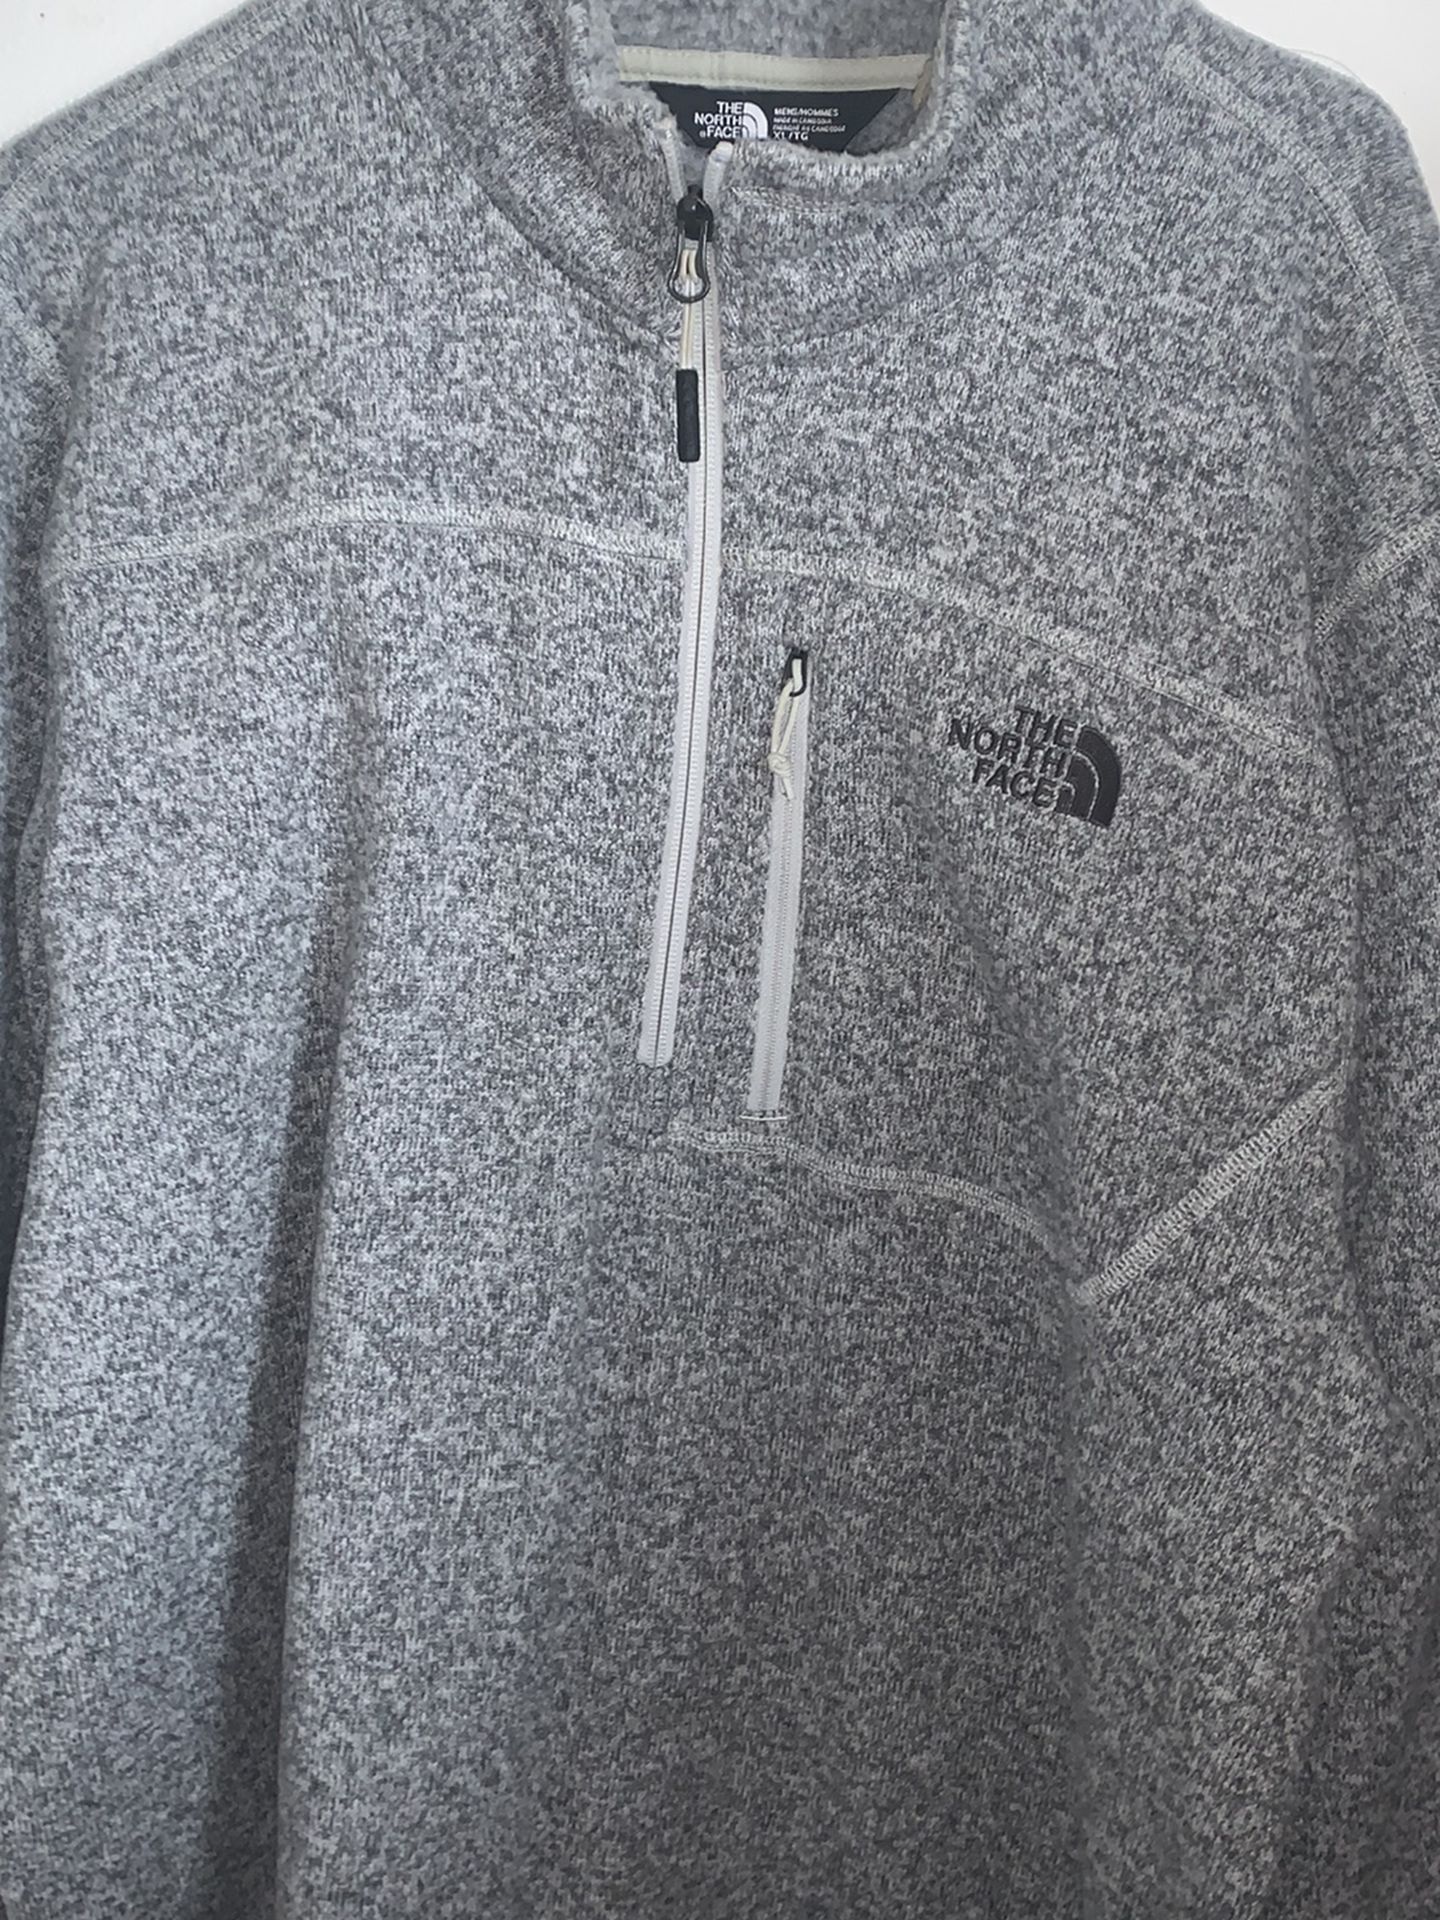 Men’s North face Sweater Jackets 1/2 Zip Up XL $25